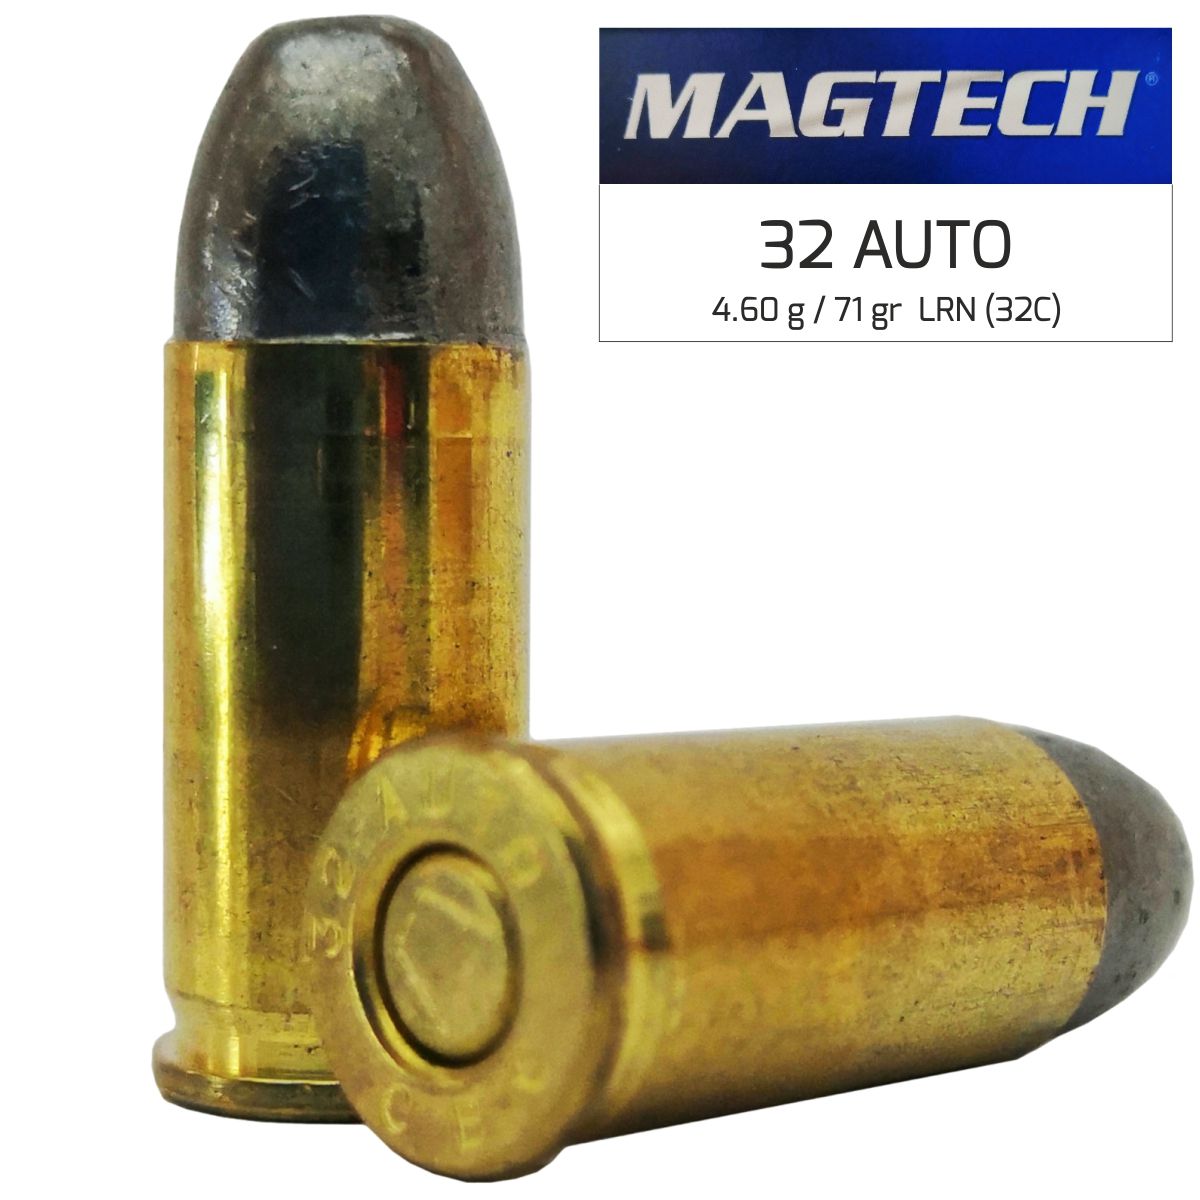 Náboj Magtech 7,65 Browning / 32 AUTO FMJ (32A) 4,60 g, 71 grs